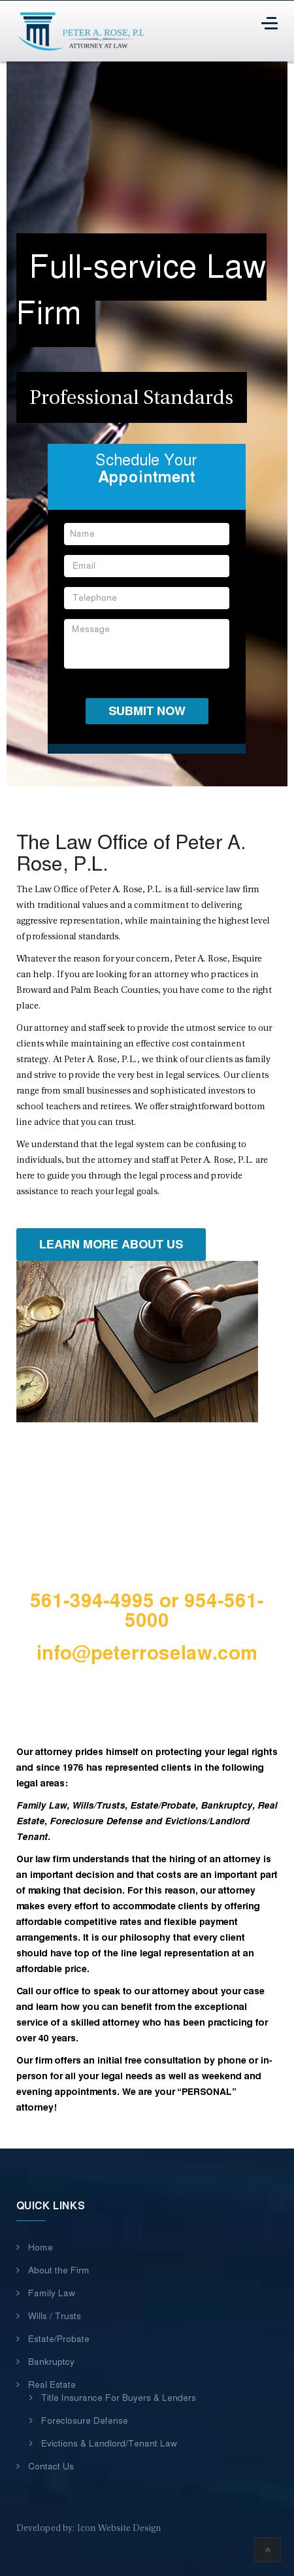 Peter A. Rose, P.L. - Boca Raton FL Lawyers